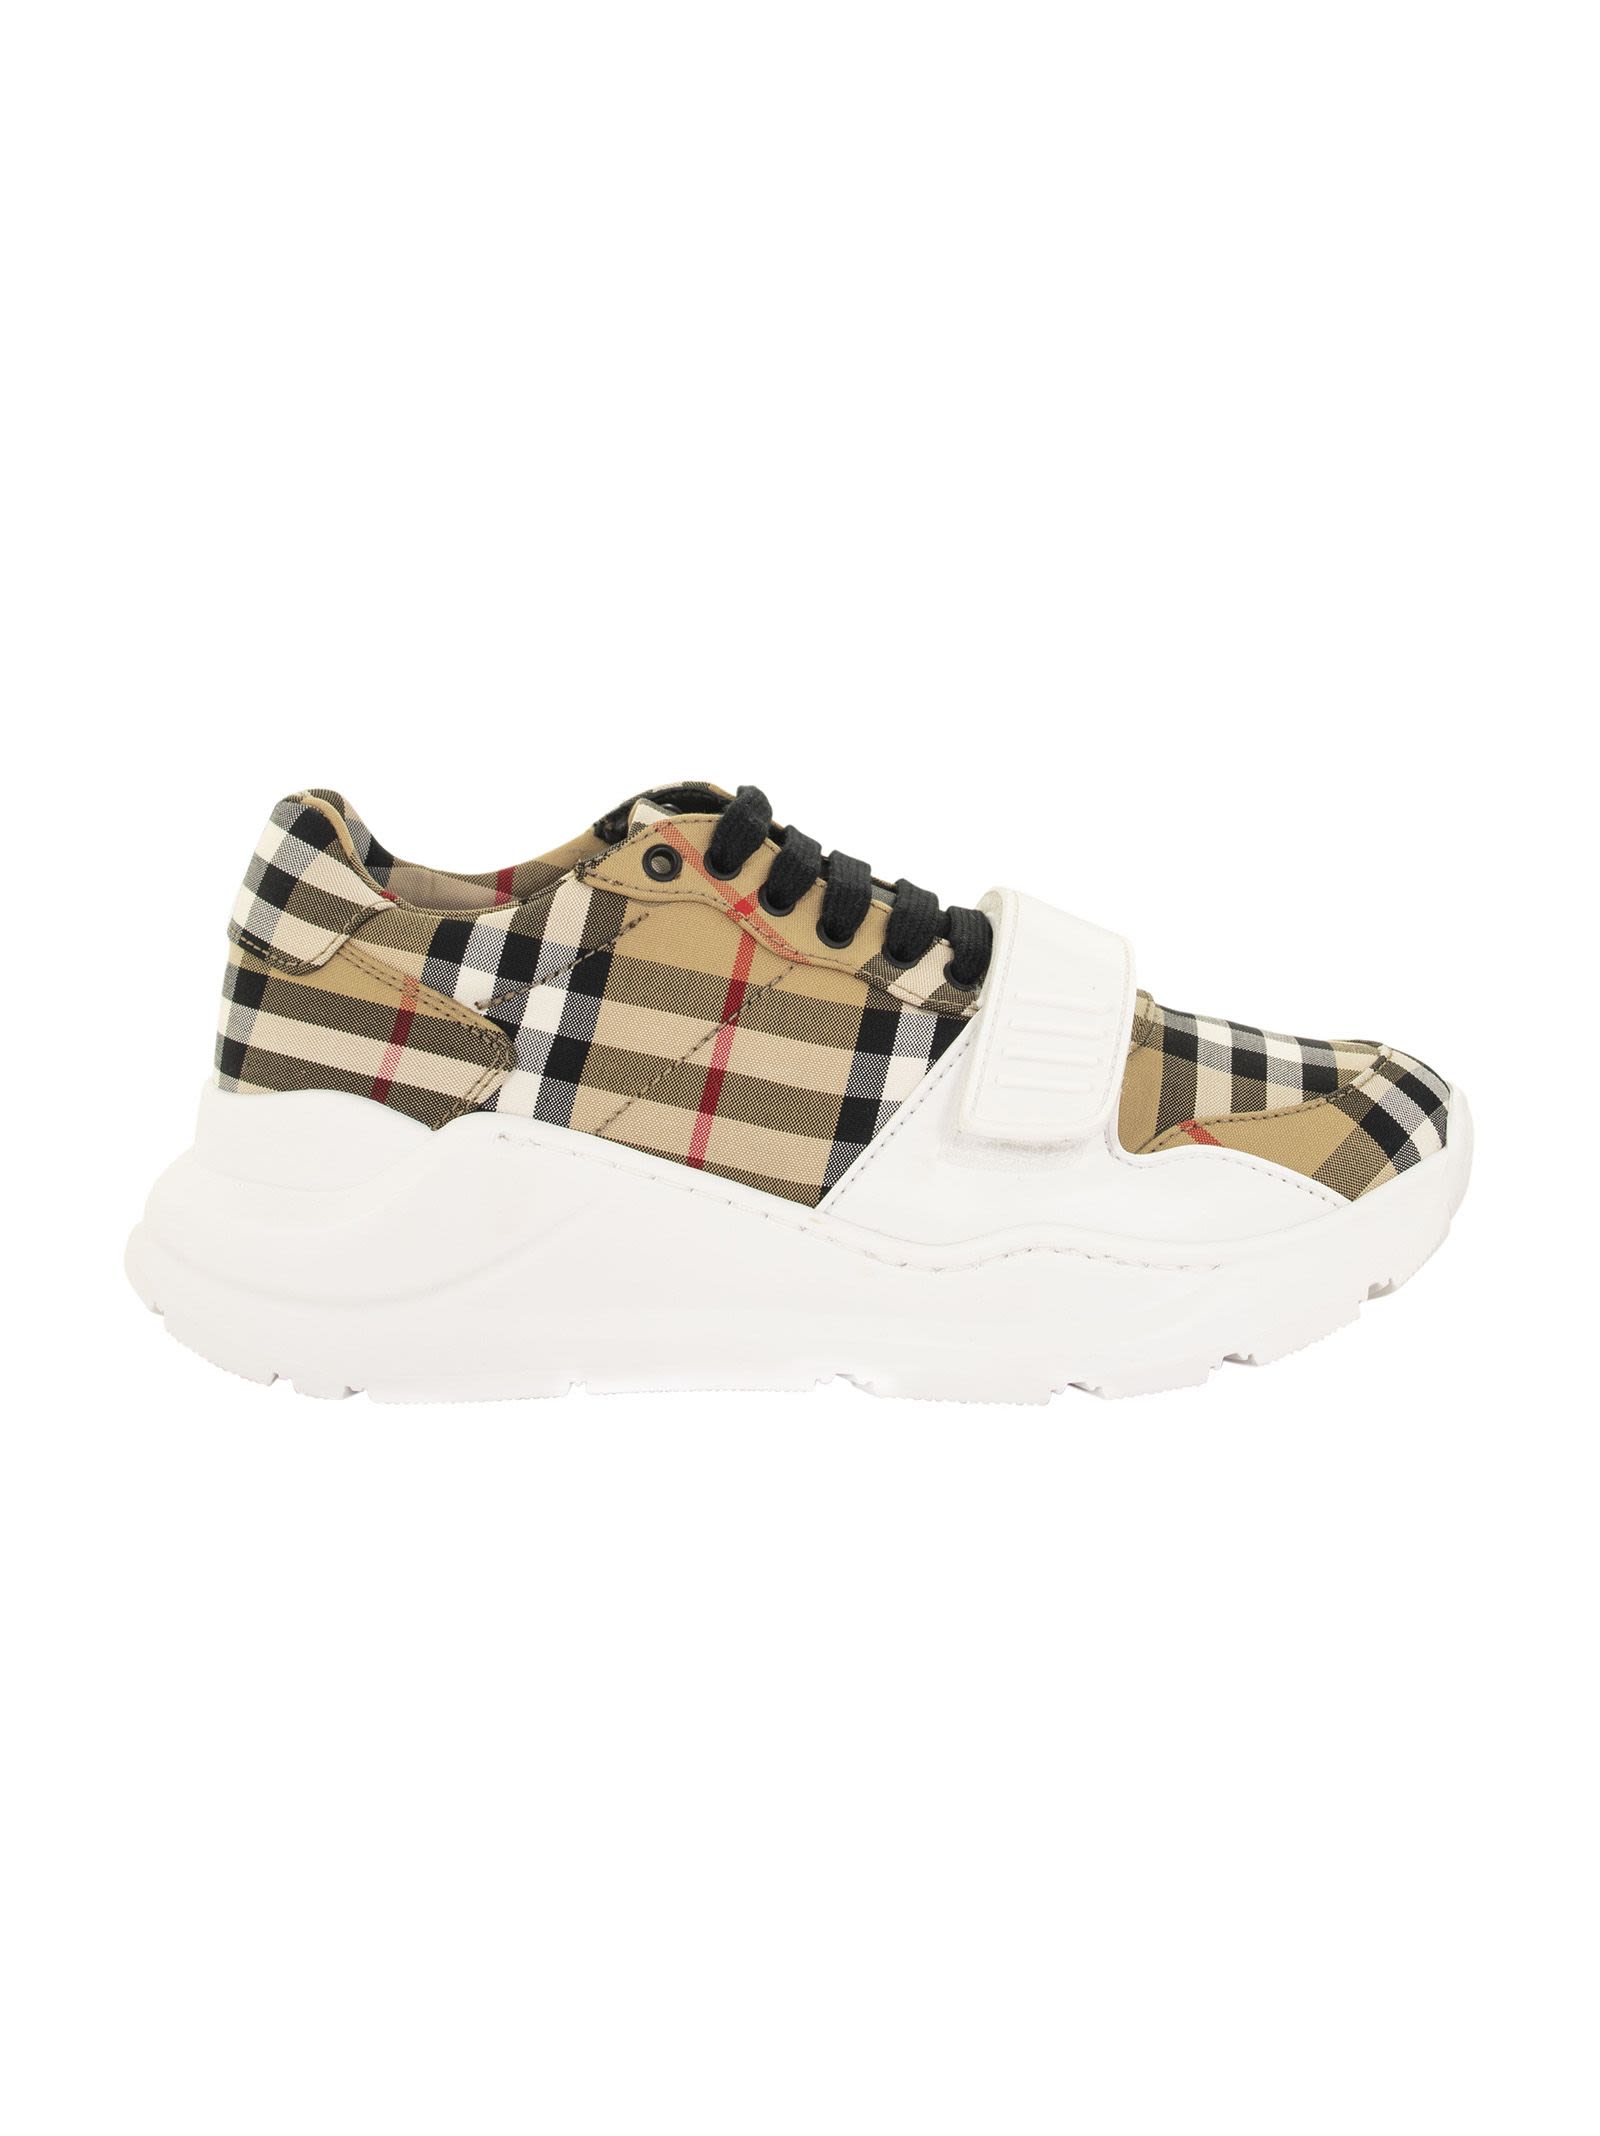 Burberry Regis Low Vintage Check Cotton Sneakers | ModeSens